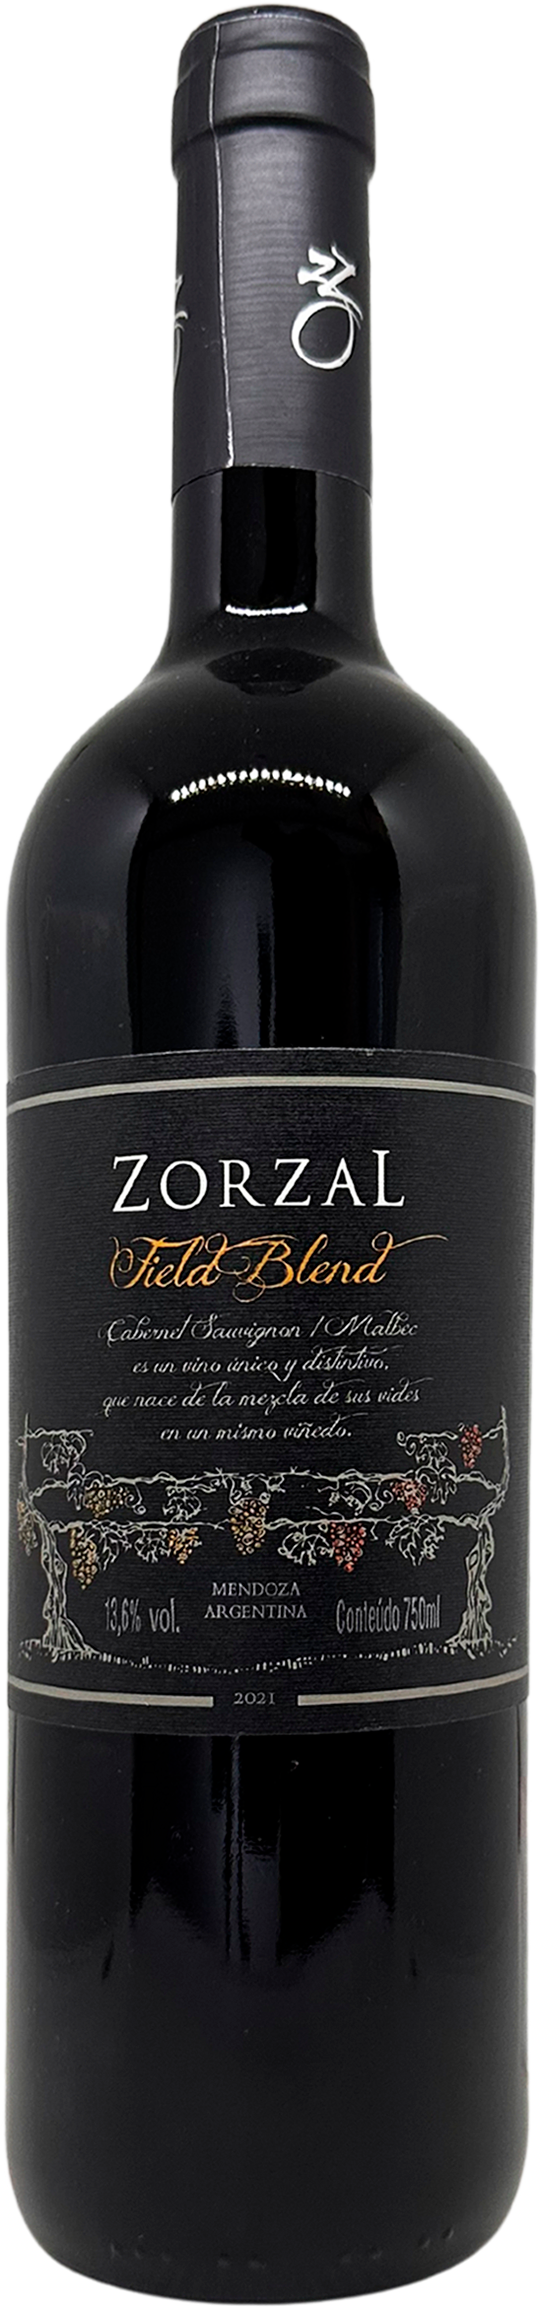 Fild Blend Zorzal Wines